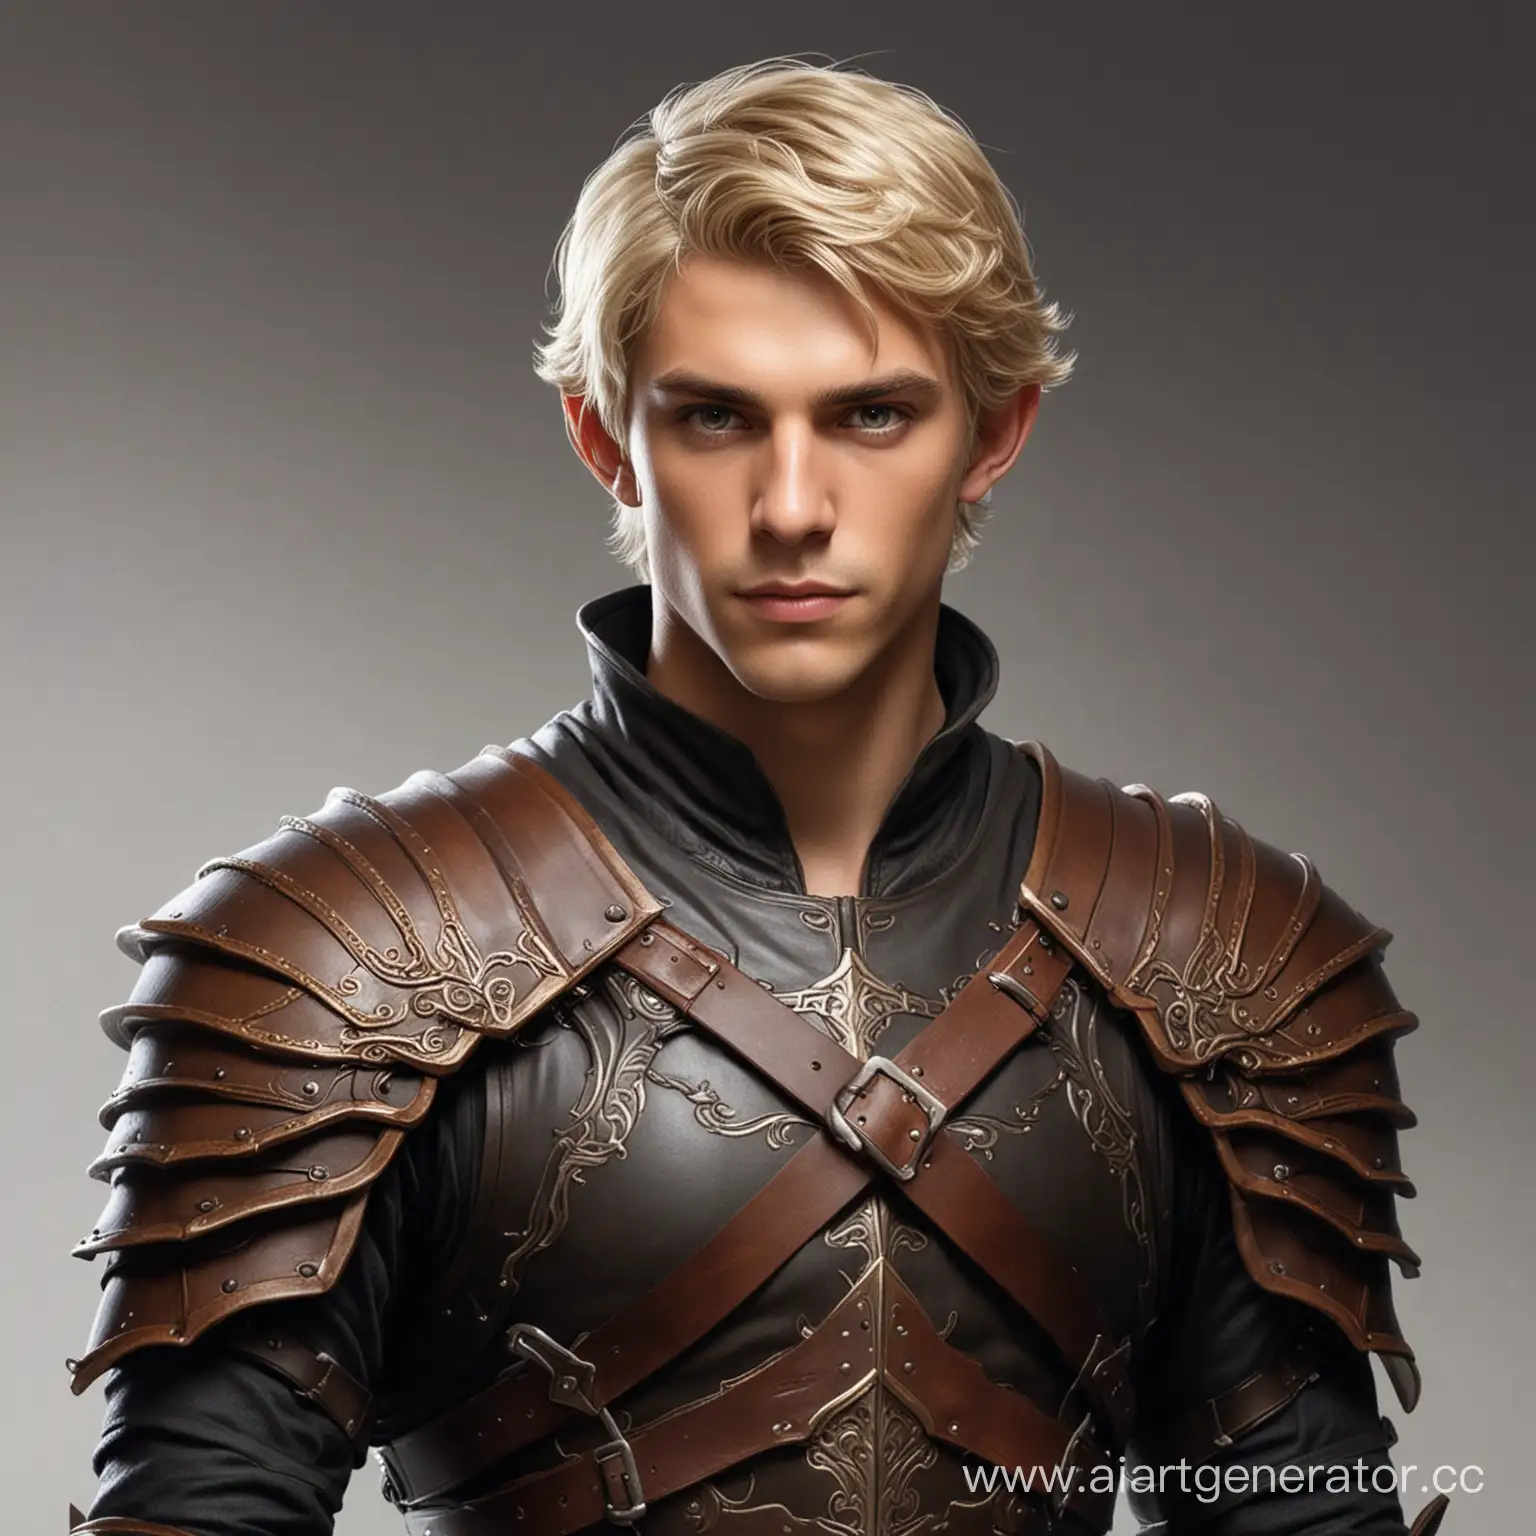 Half-Elf, Male, Short blond hair, brown eyes, Leather armor, Full height